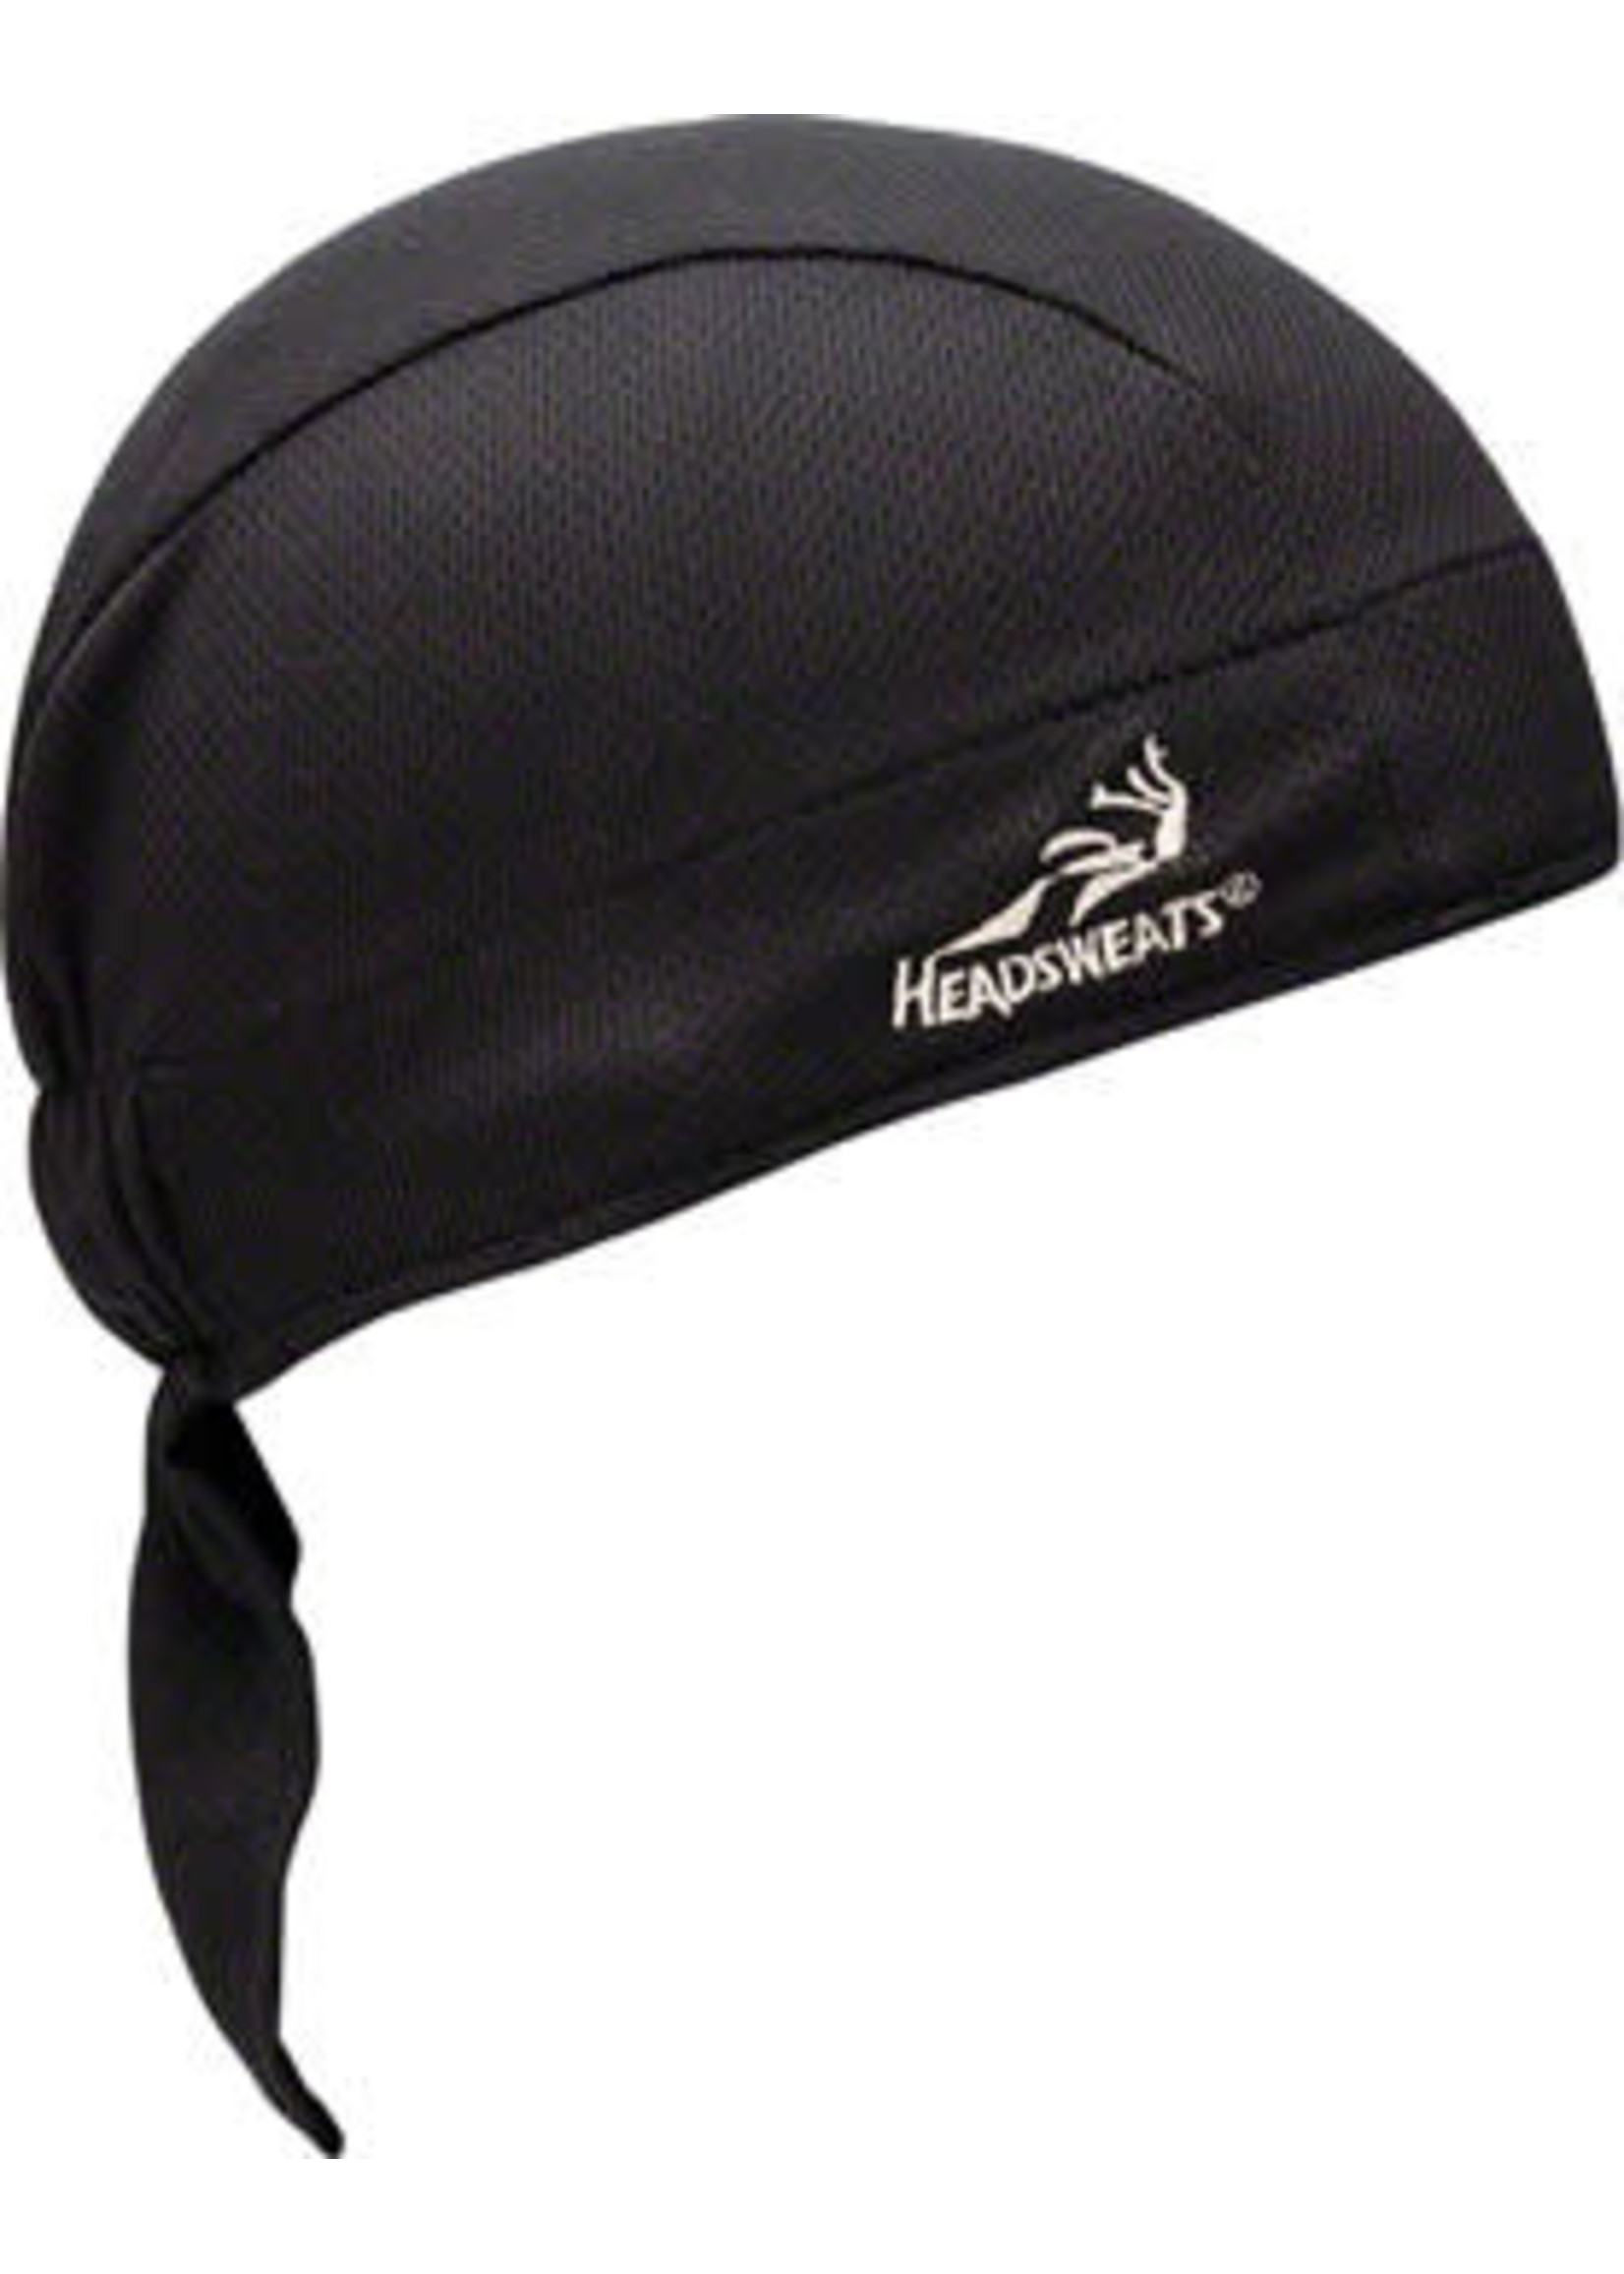 Headsweats Headsweats Super Duty Shorty Headband: One Size Black